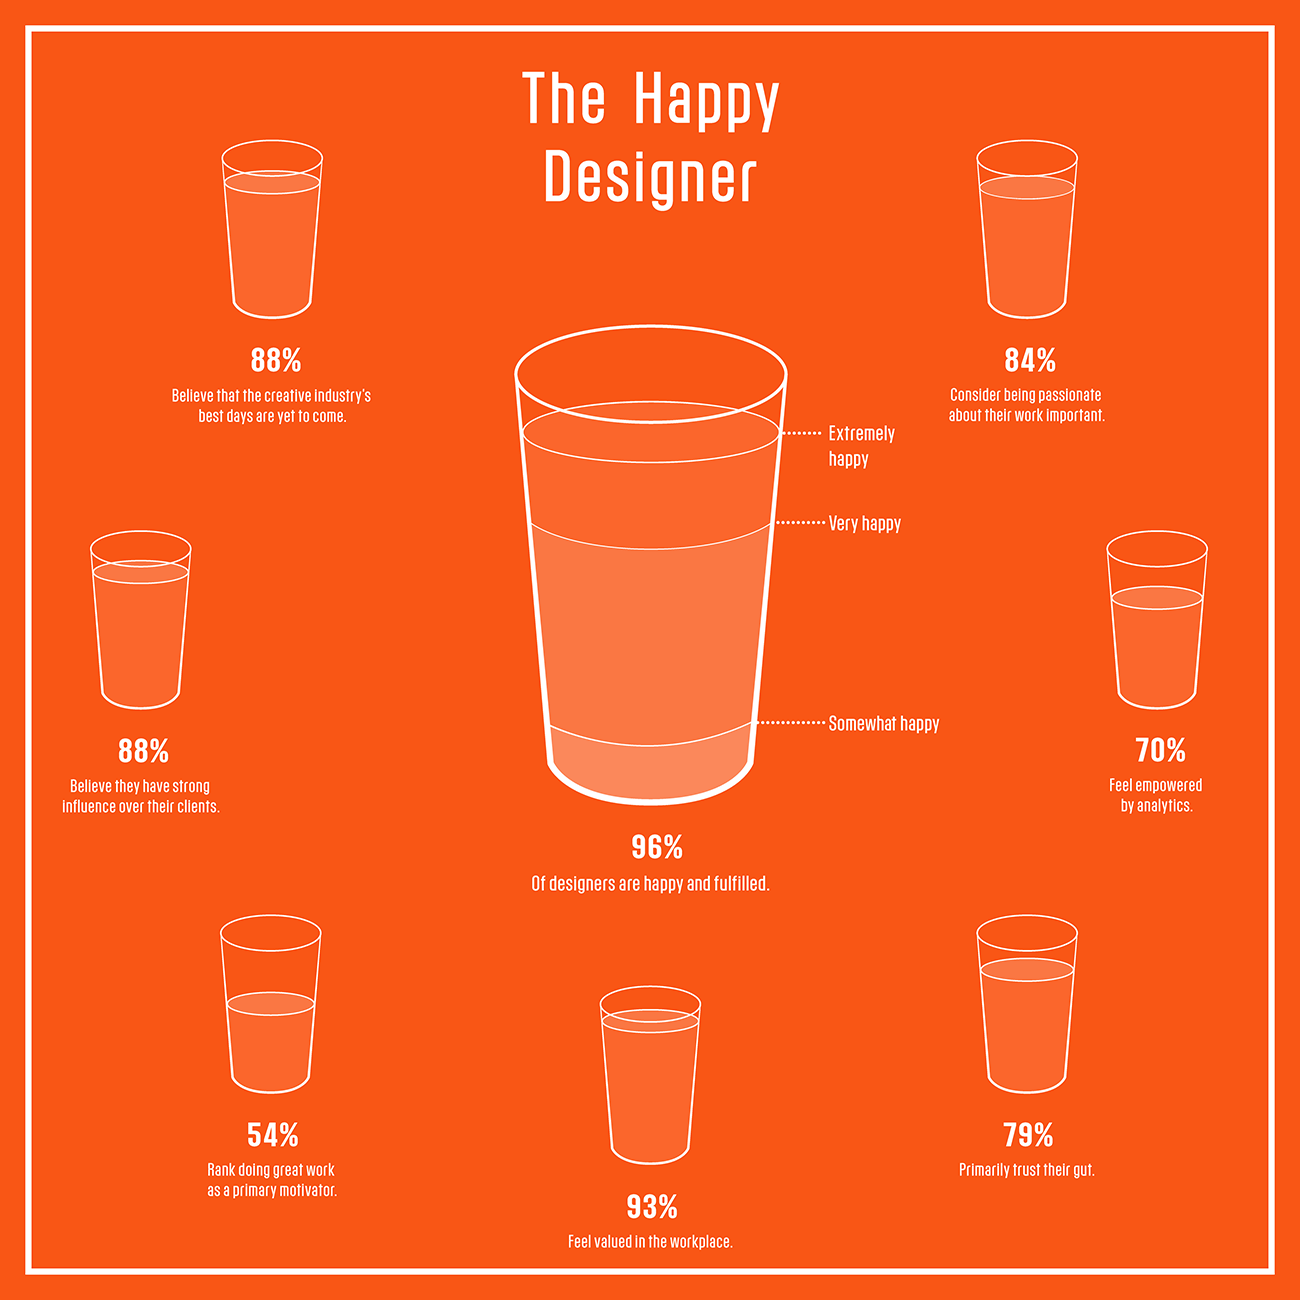 The Happy Designer